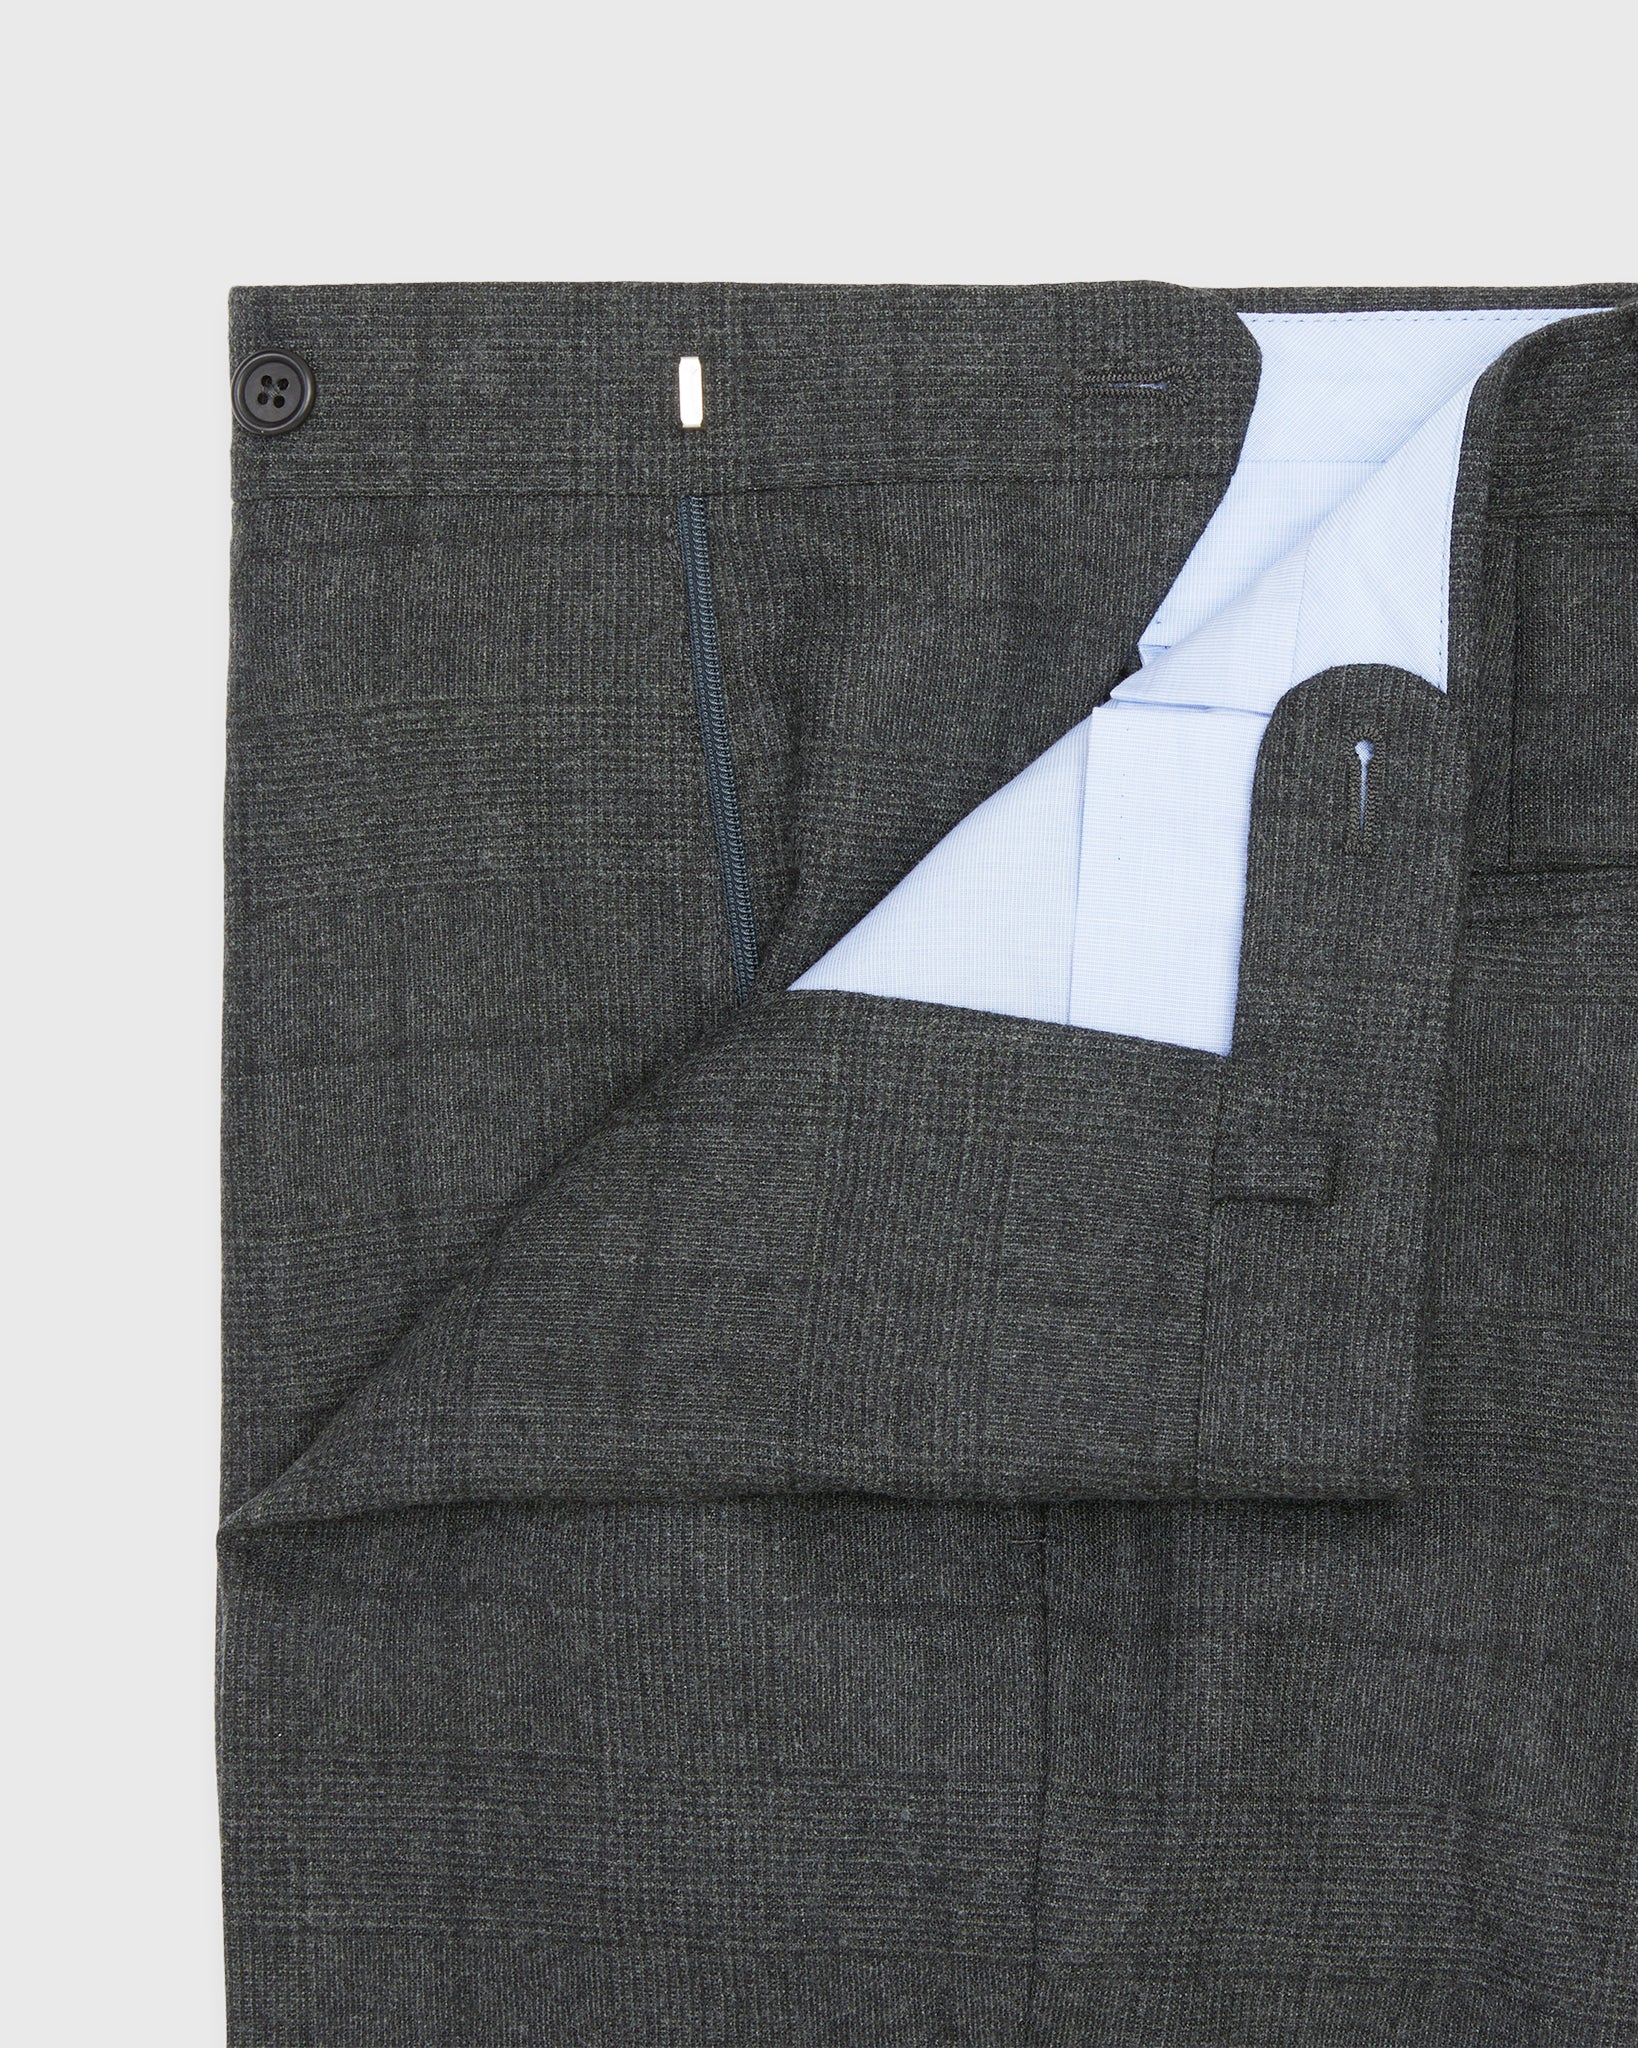 Virgil No. 2 Suit in Charcoal Glen Plaid Flannel